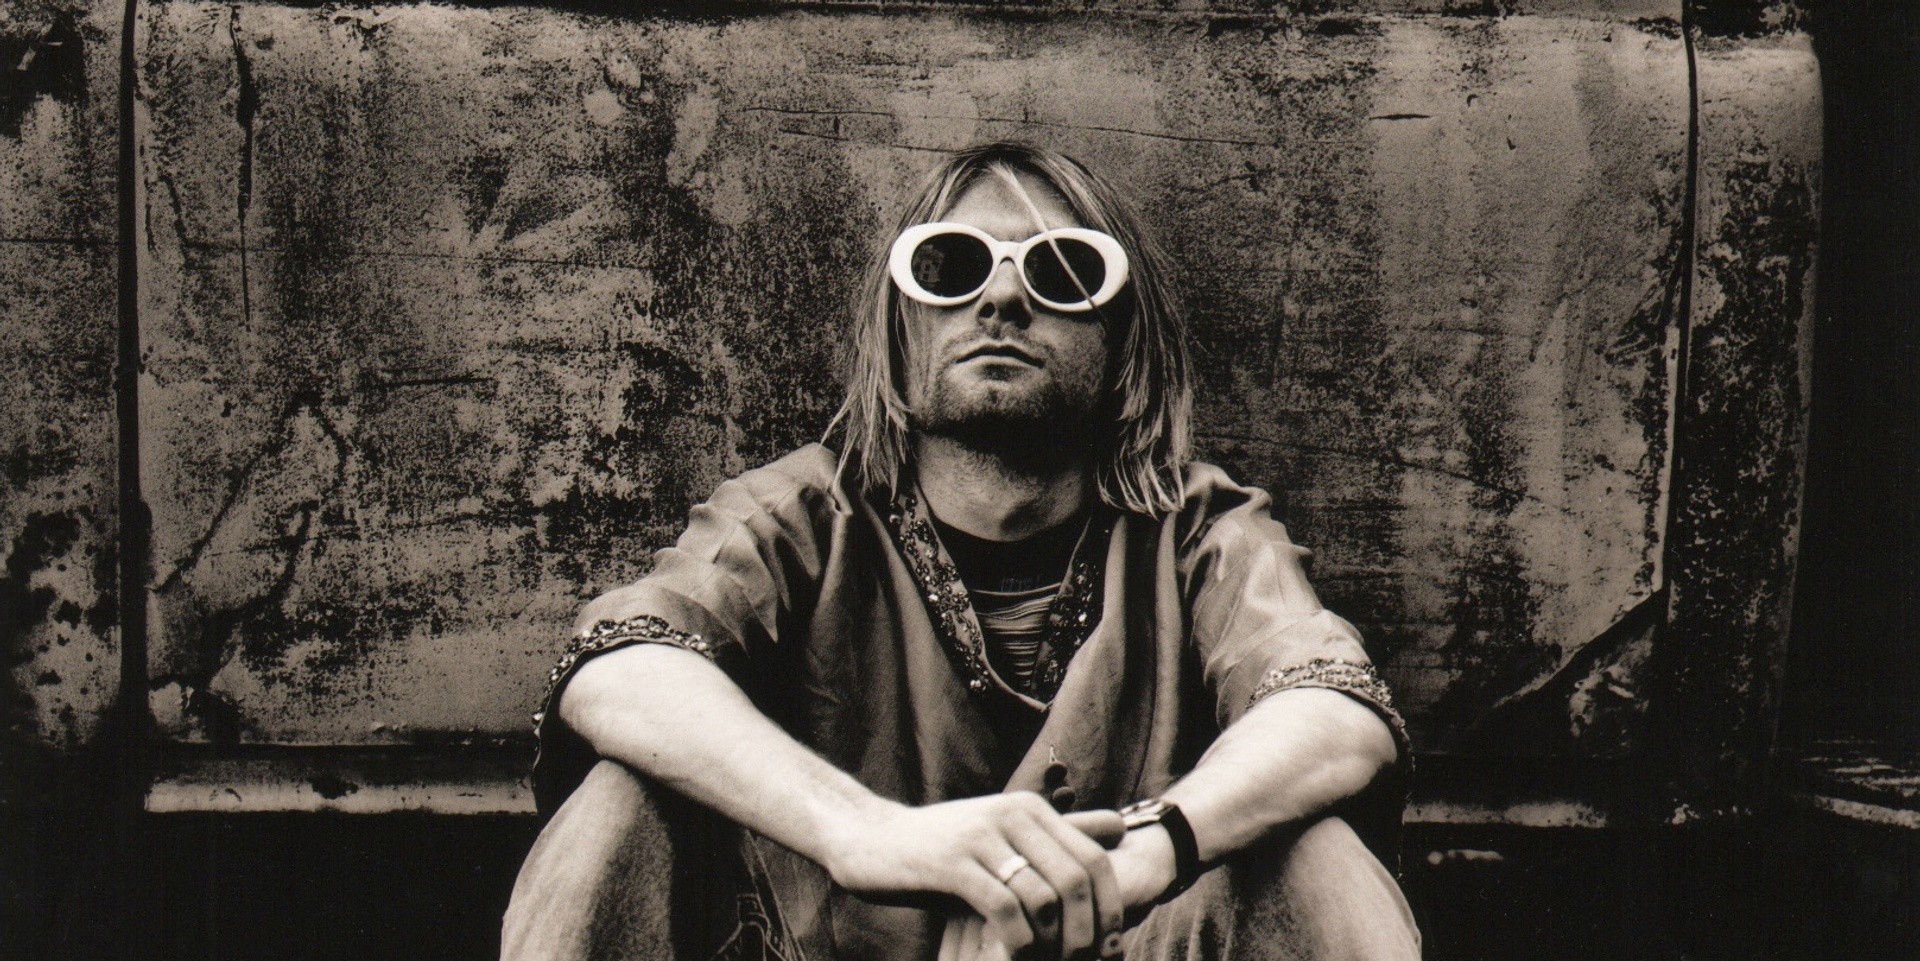 Bata revives the Hotshot sneaker line, as worn by Nirvana's Kurt Cobain